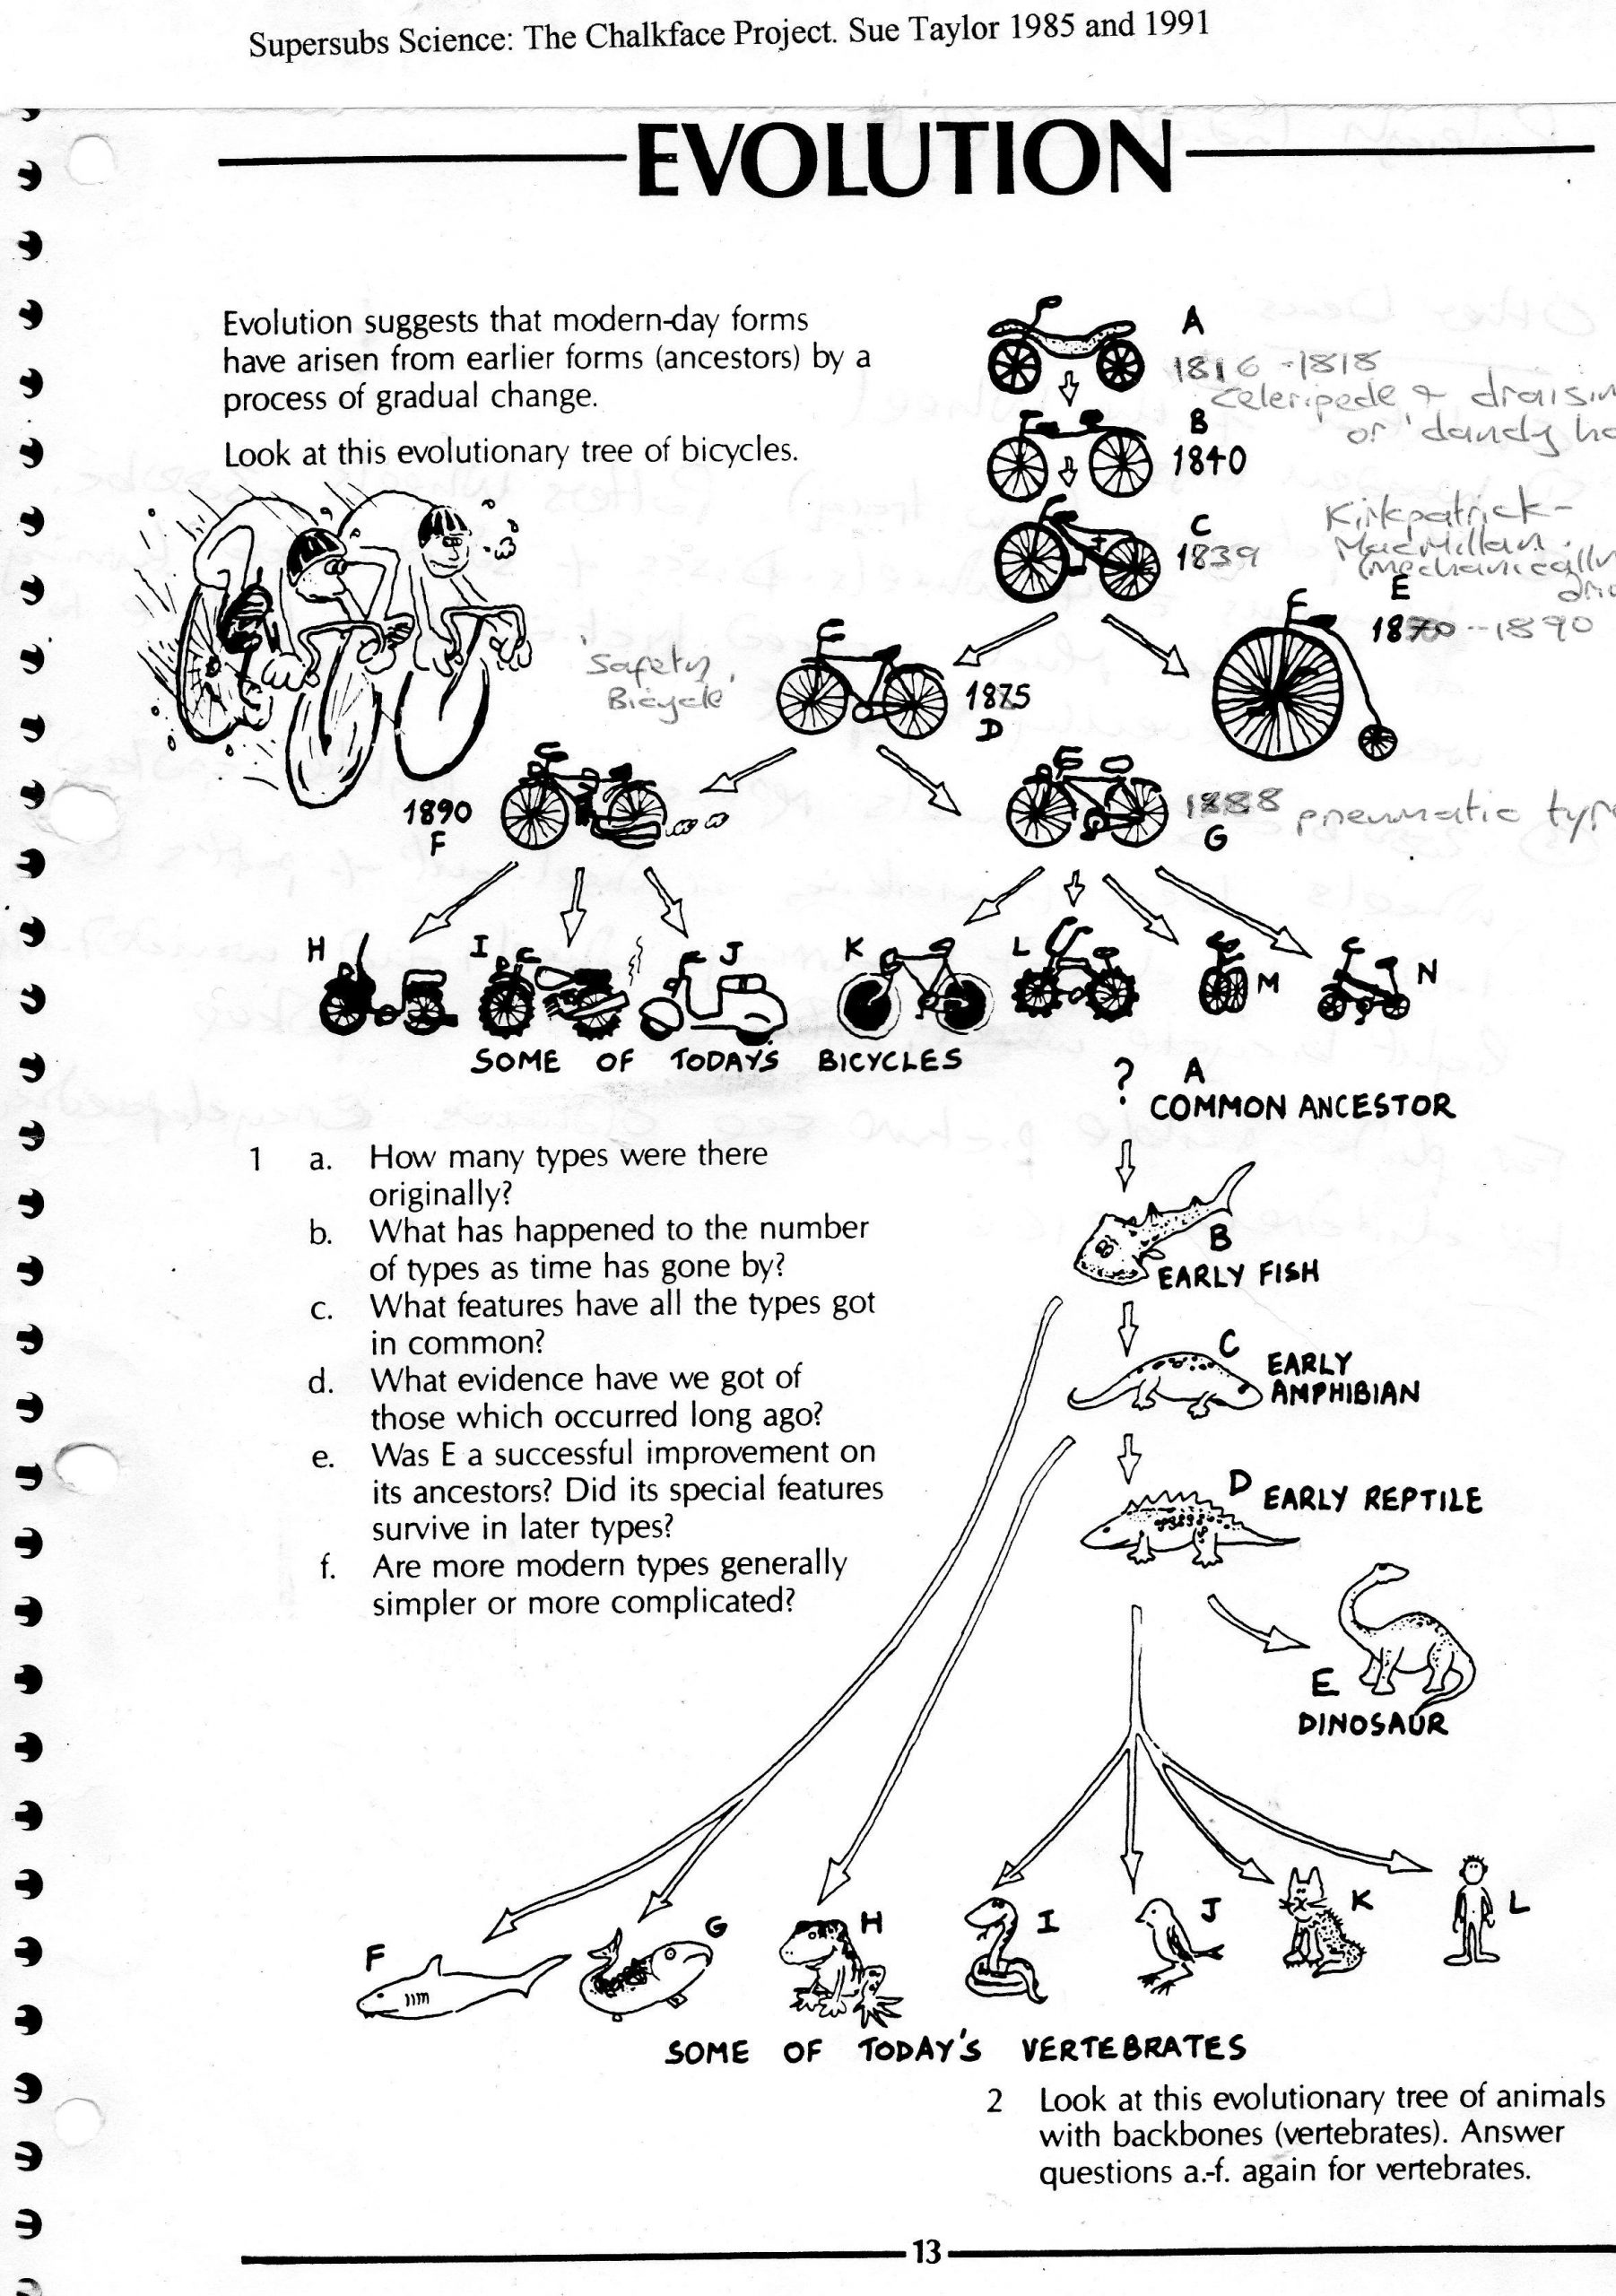 Evidence Of Evolution Worksheet Worksheet On Evolution Using Bicycles as A Metaphor before